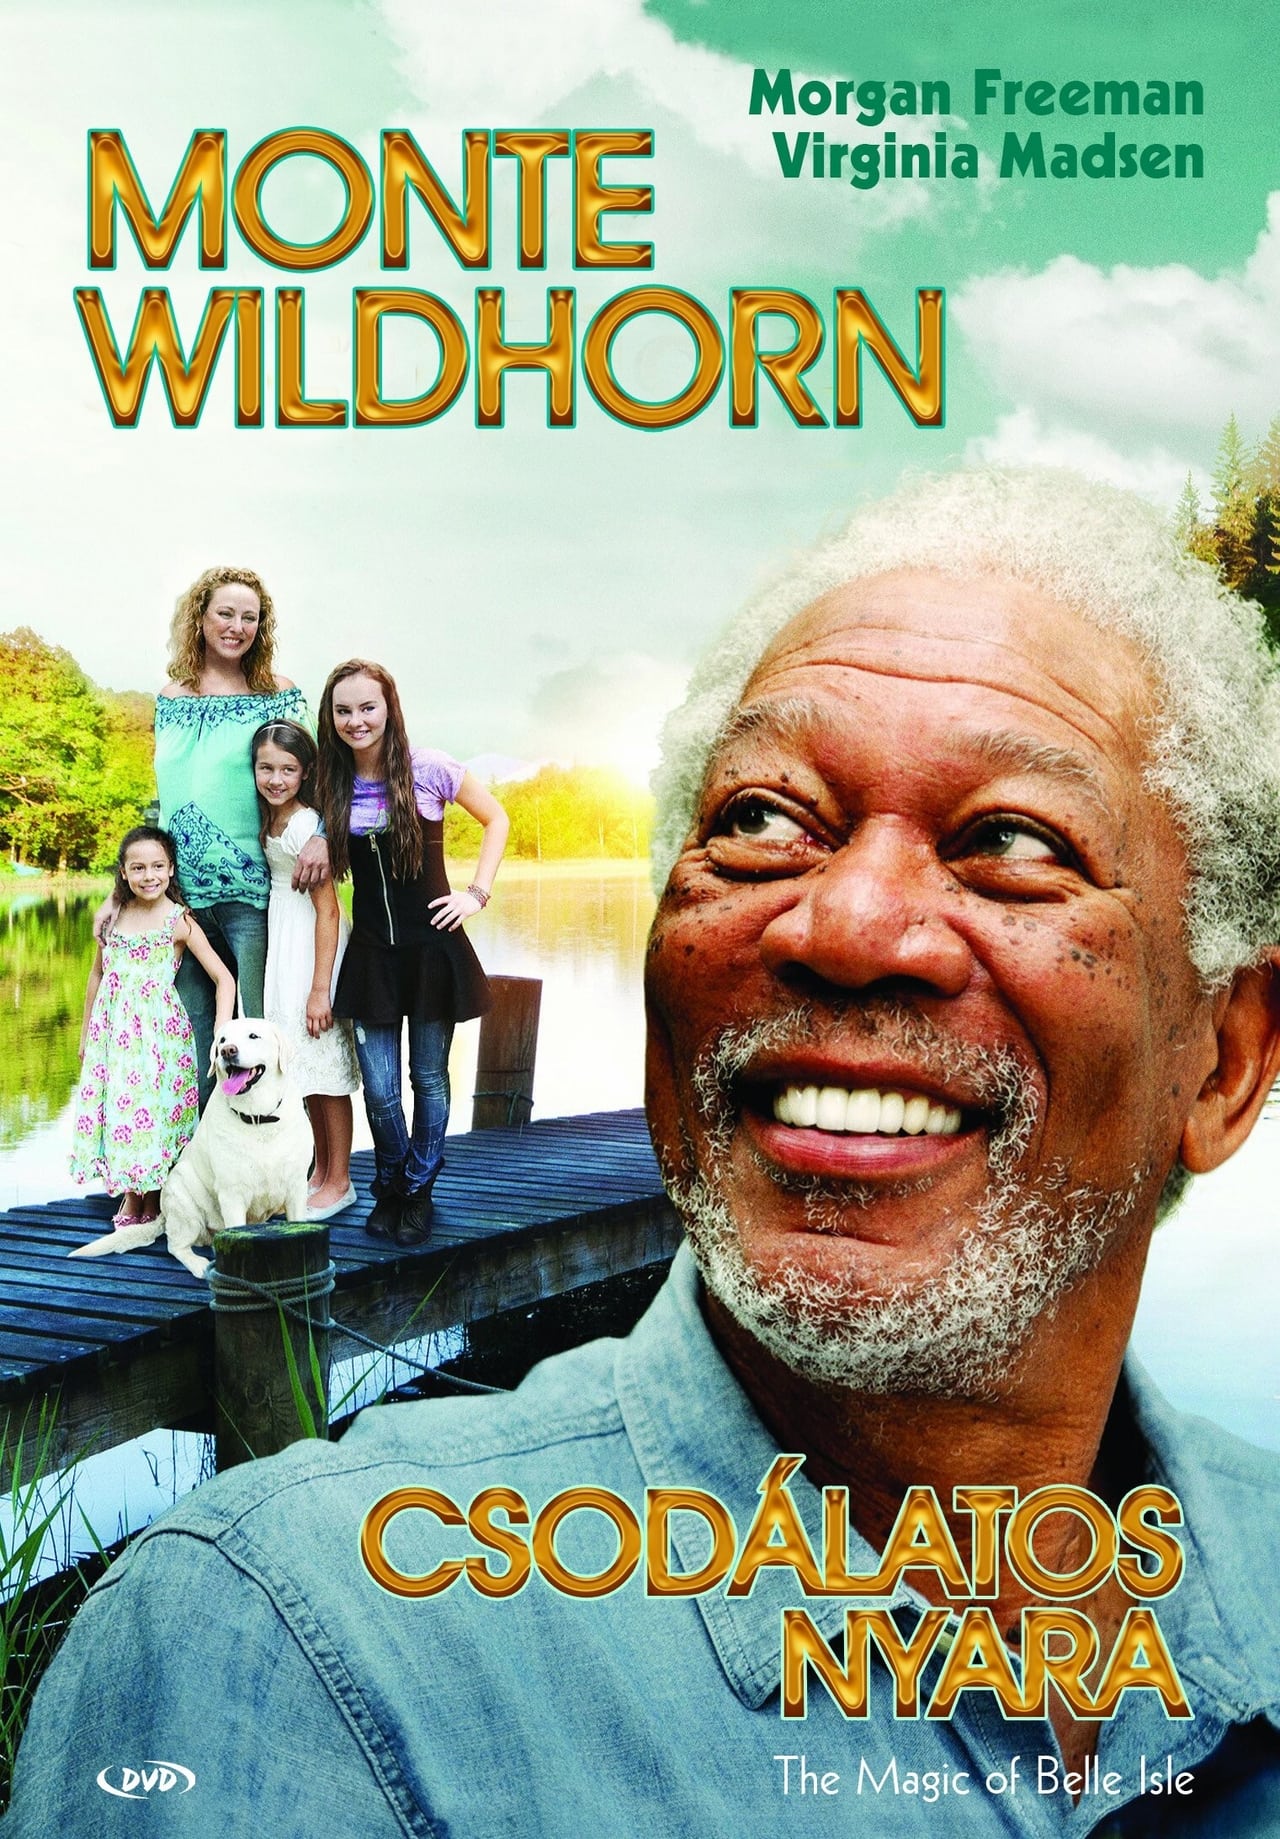 Monte Wildhorn csodálatos nyara online teljes film (2012) 